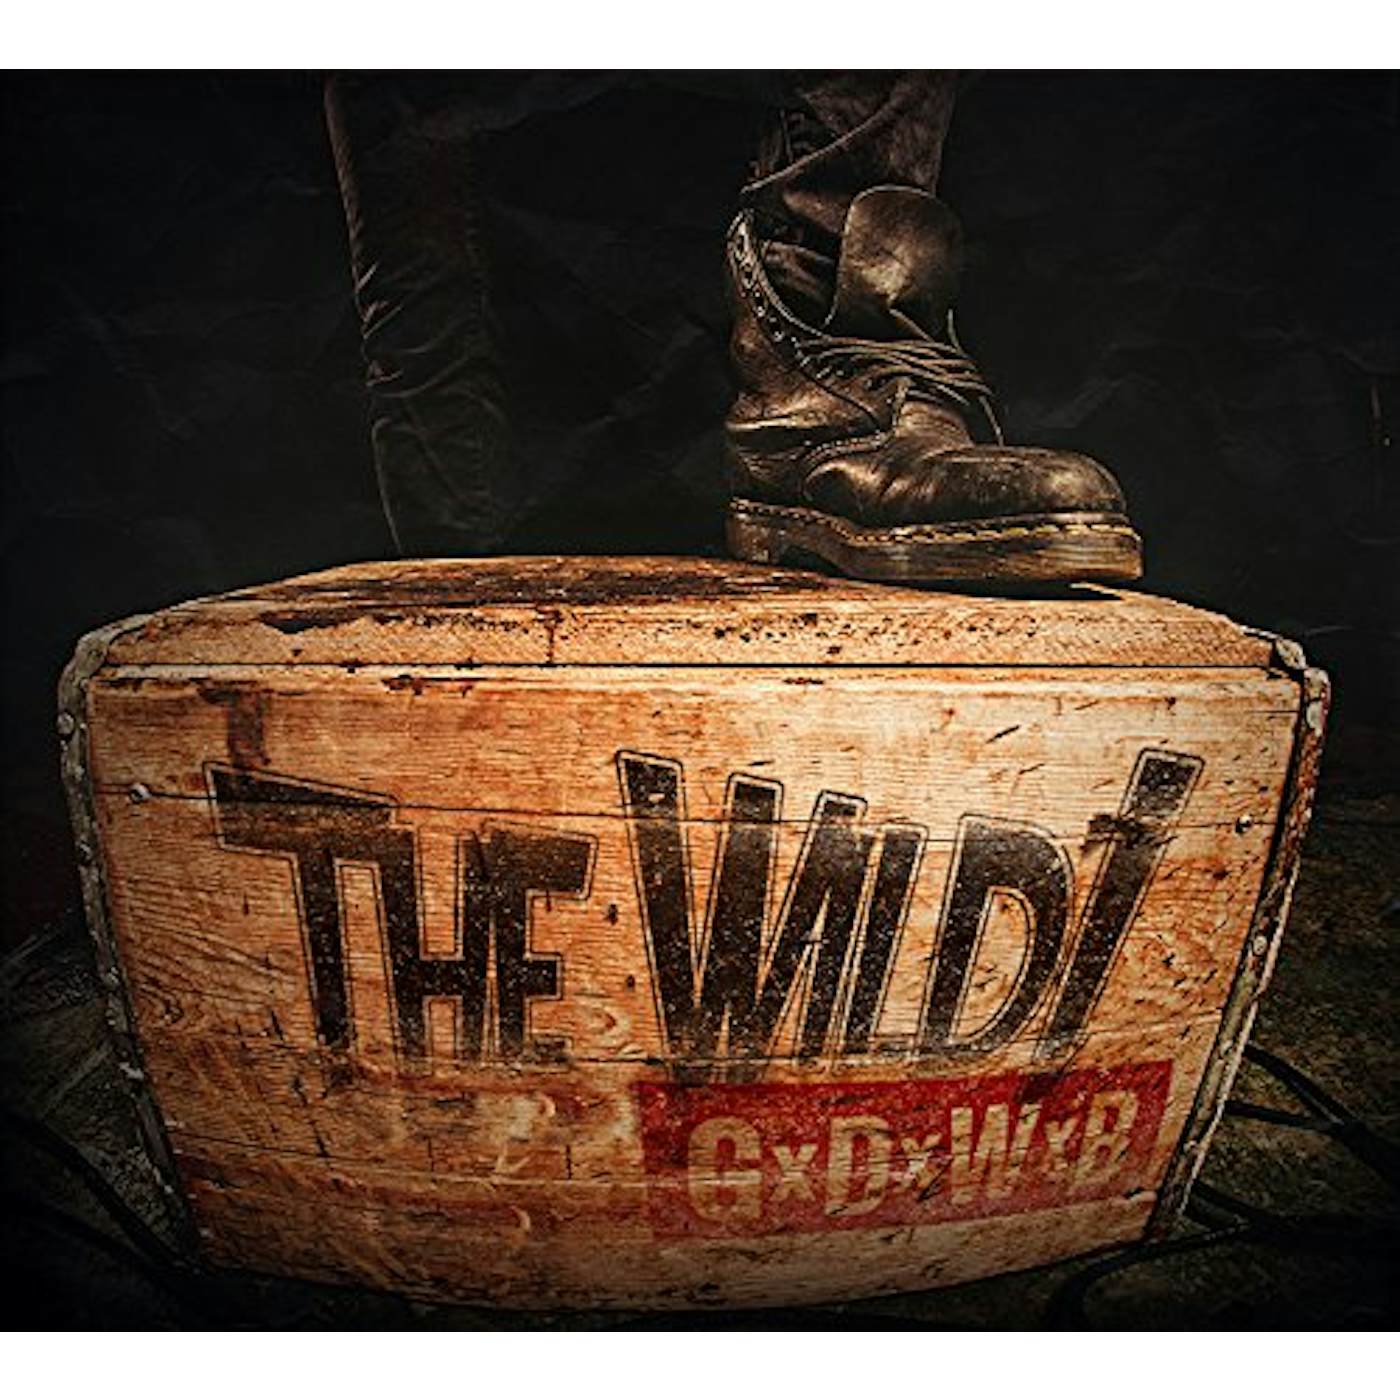 The Wild GXDXWXB CD